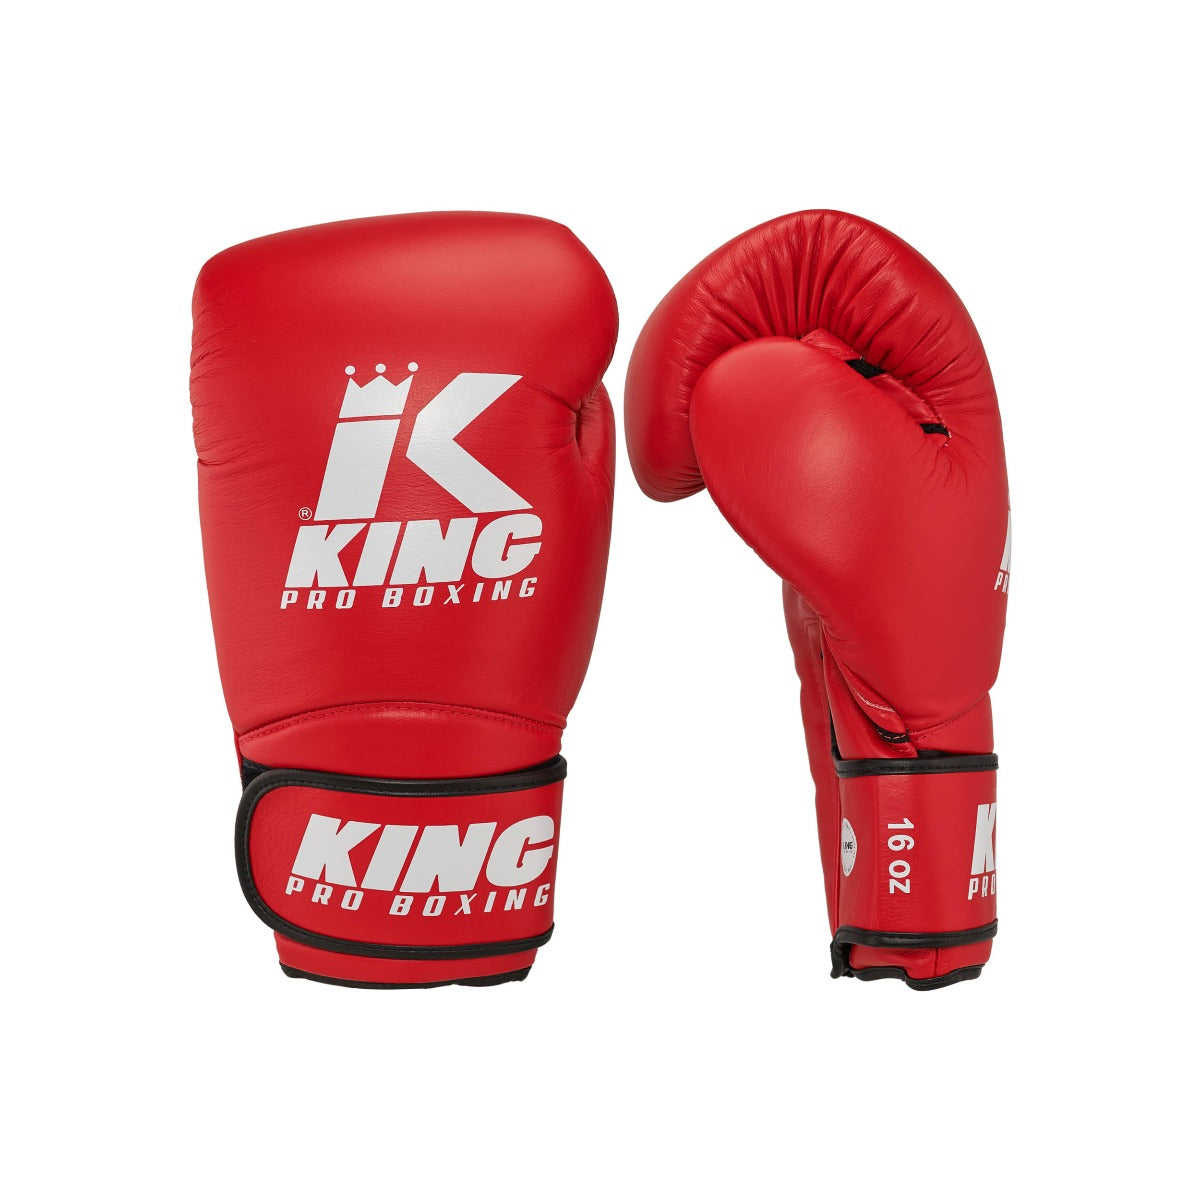 King PRO boxing boxing gloves - STAR MESH 5